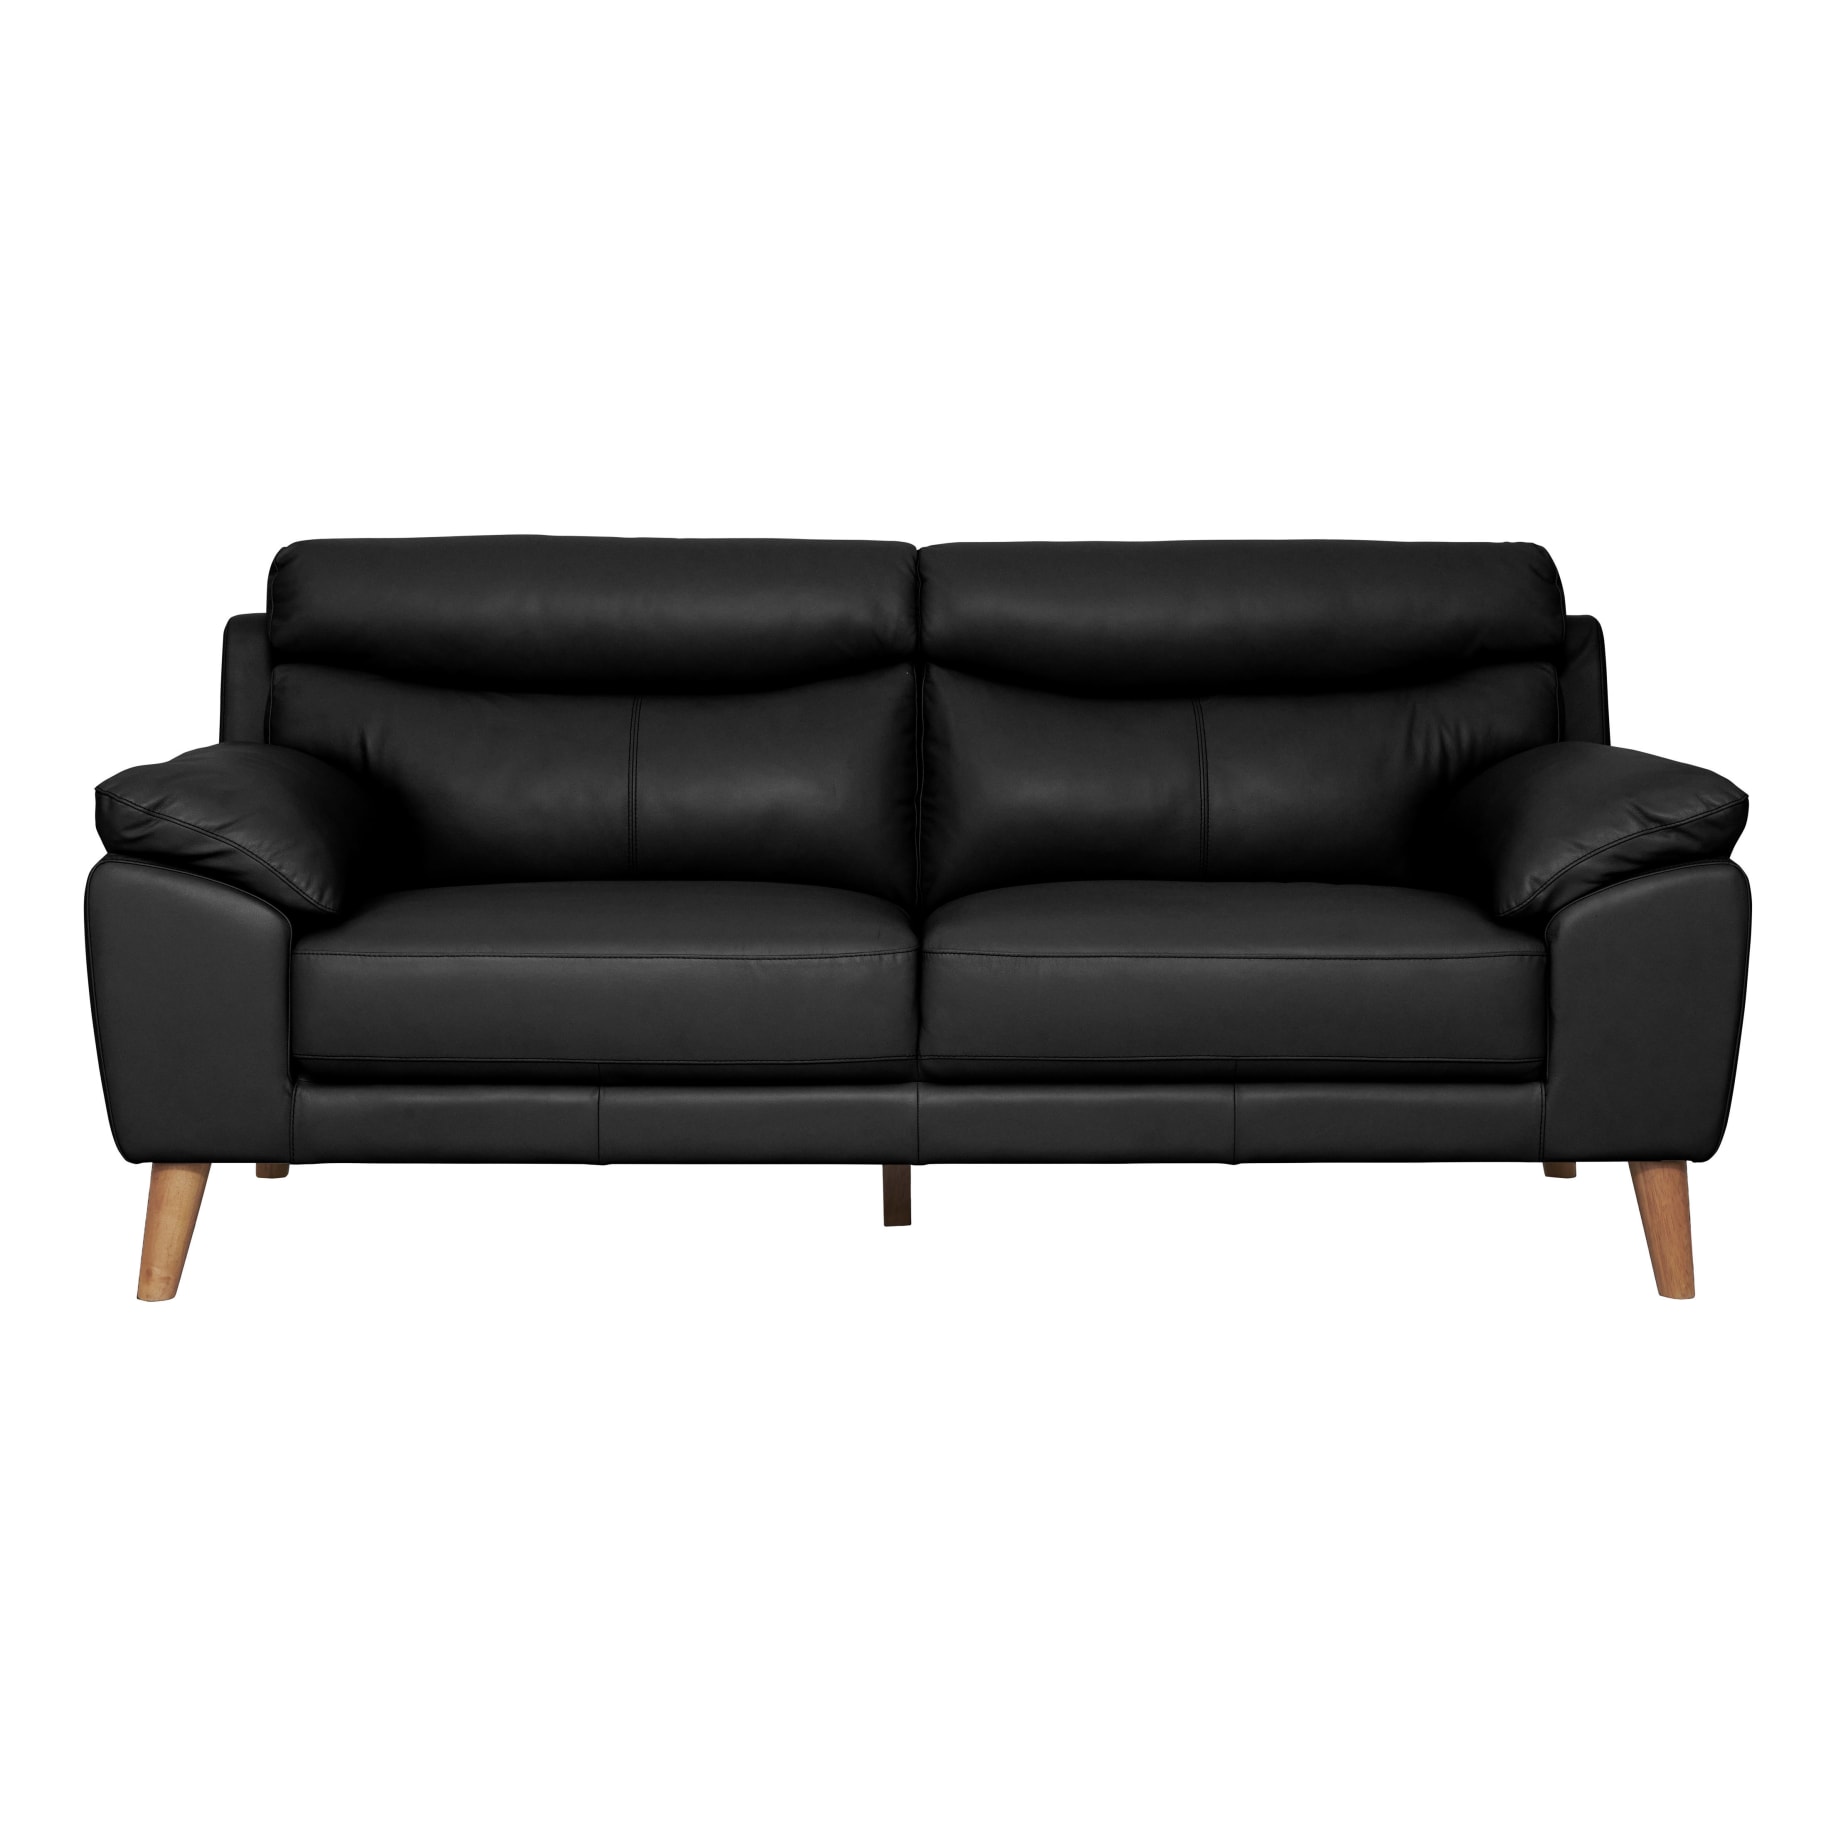 Bronco 3 Seater Sofa in Leather Black